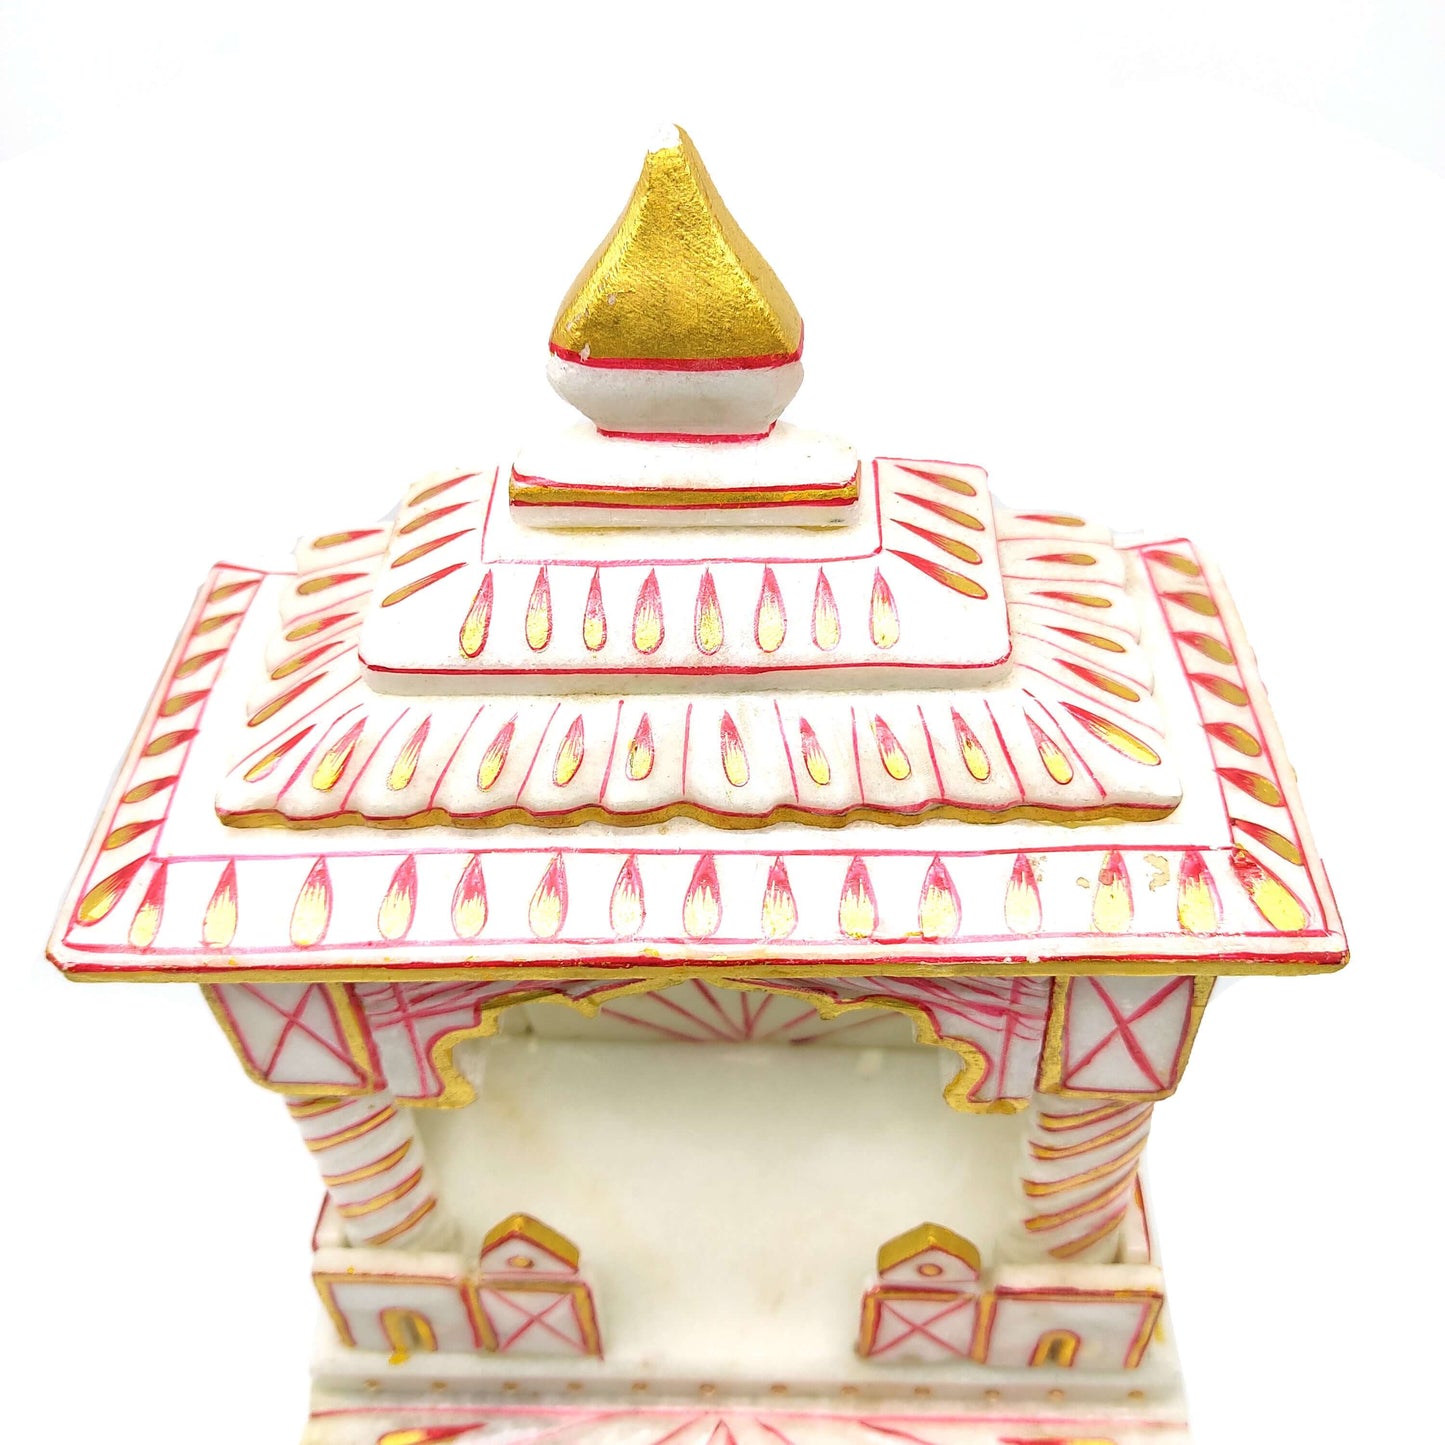 100% Marble Shrine Mandir Personal Altar Home Puja Devotional God Worship 12"